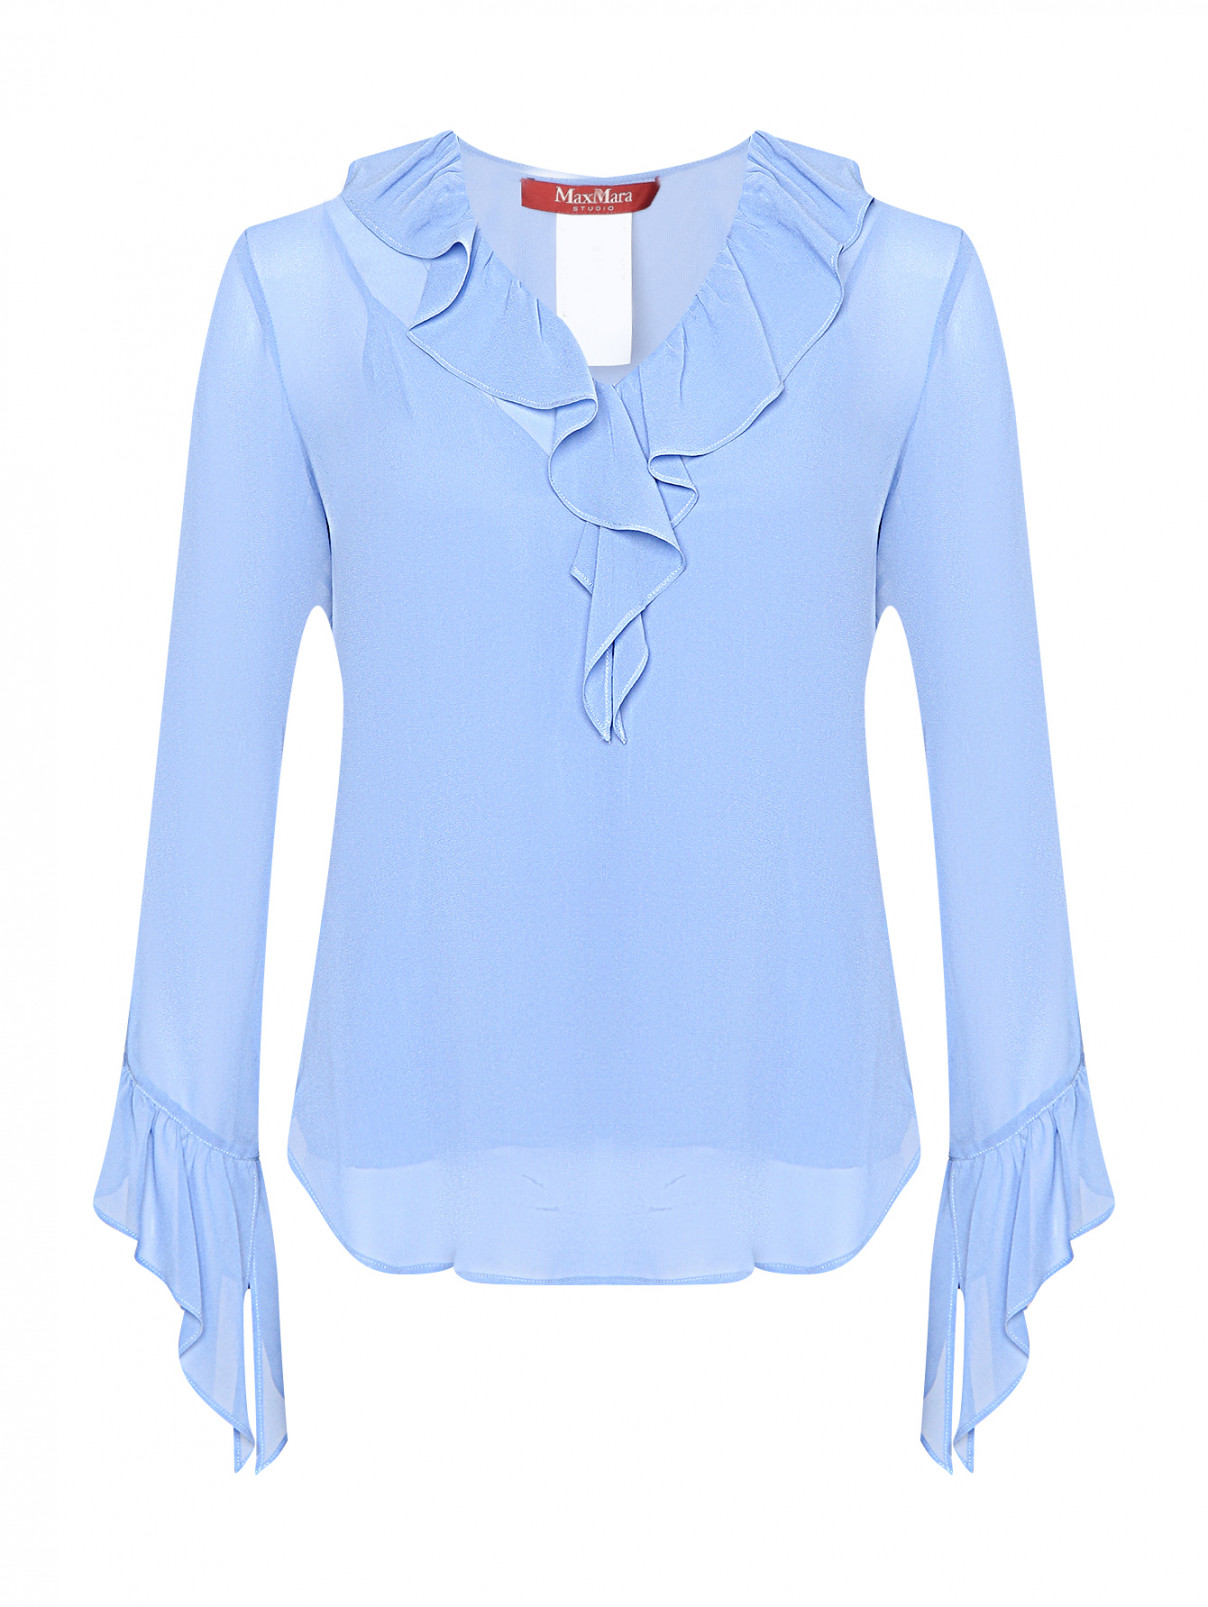 Блуза из шелка с воланами Max Mara  –  Общий вид  – Цвет:  Синий